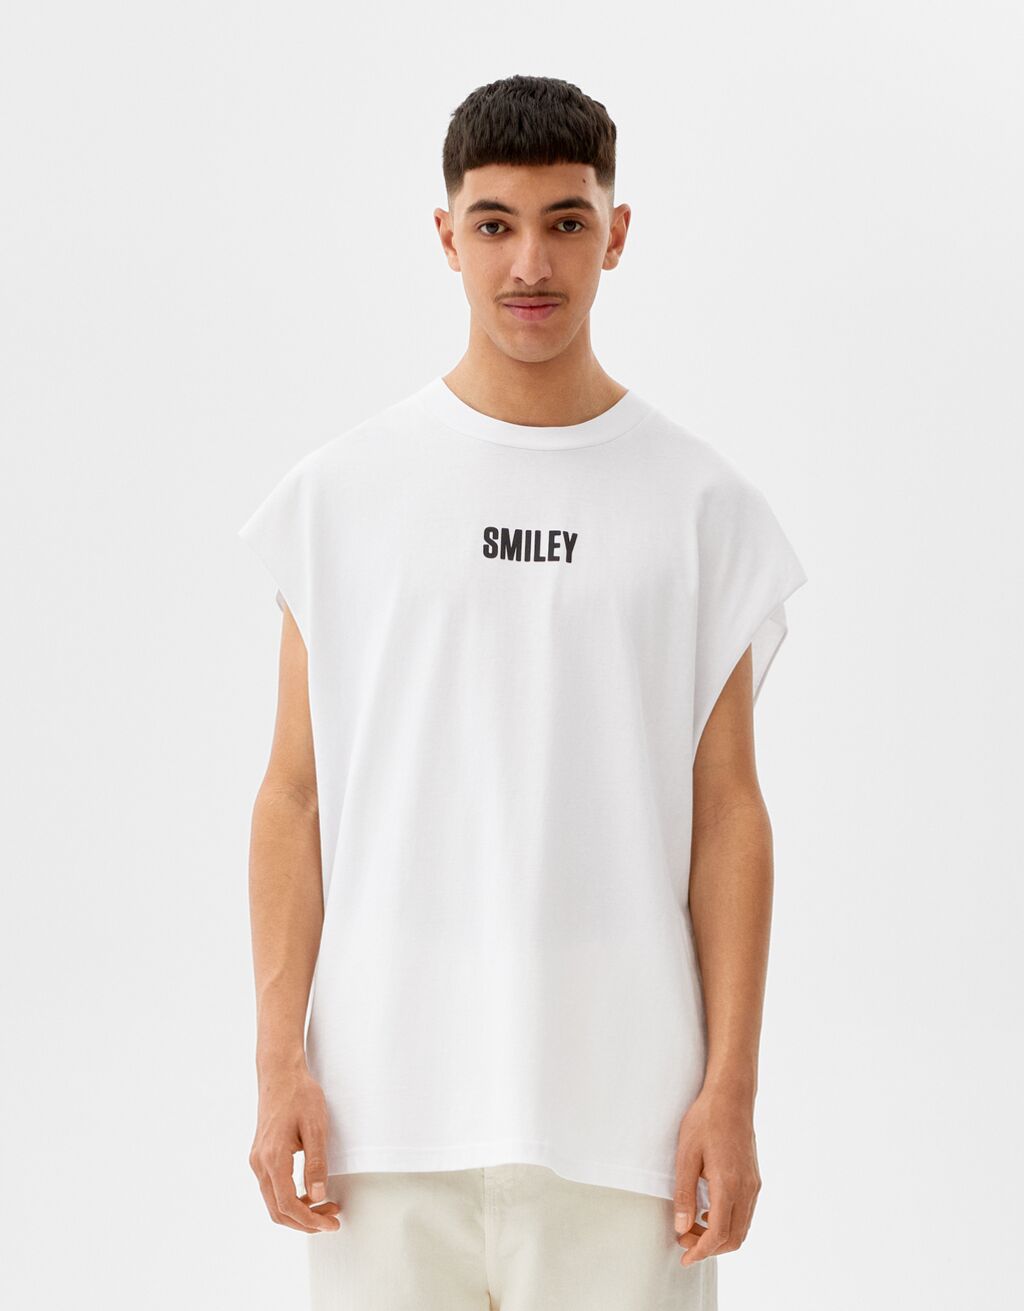 Ärmelloses Oversize-Workwear-Shirt mit Smiley®